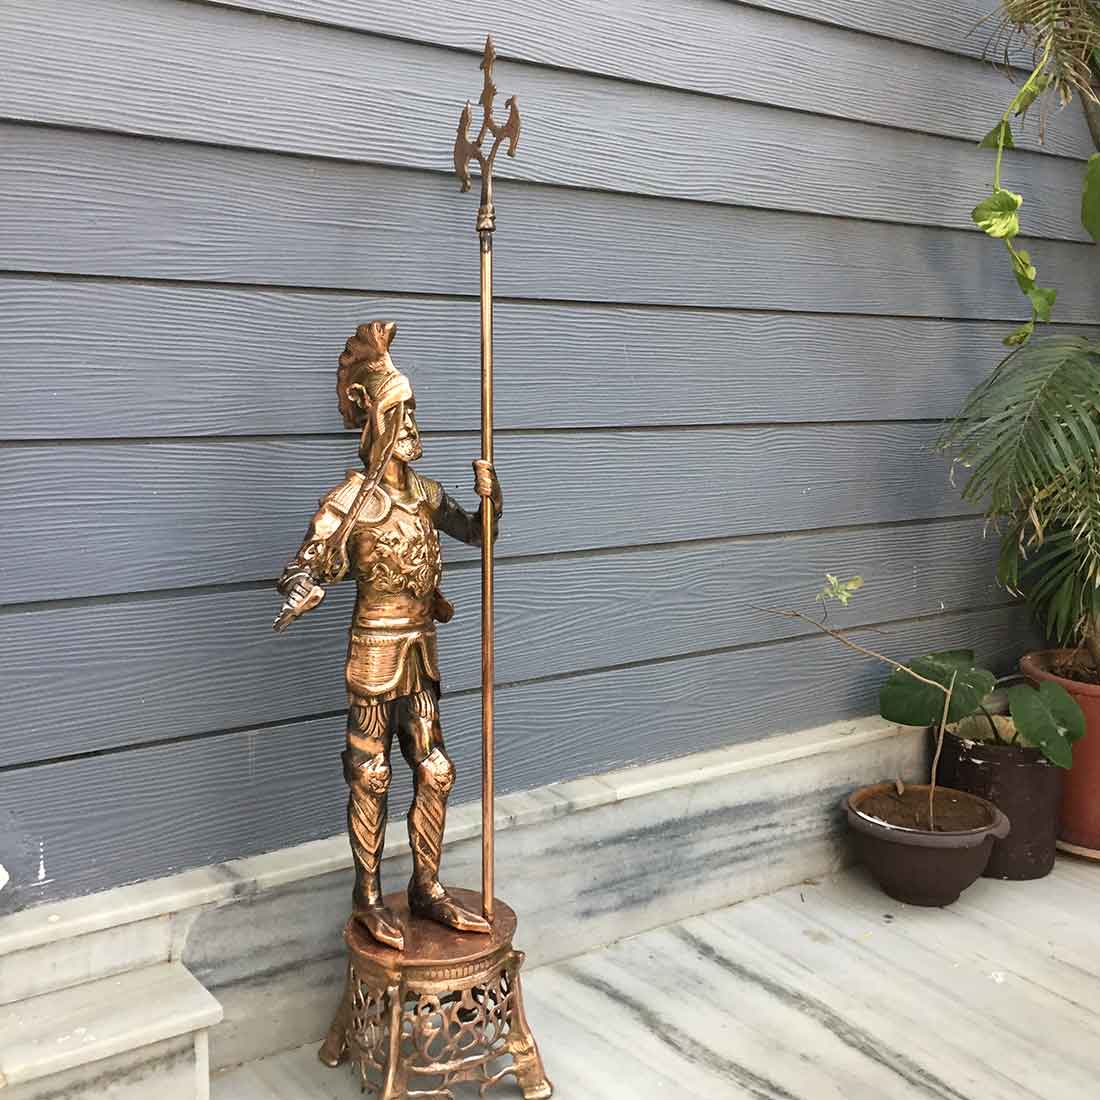 Soldier Figurine - Antique Showpiece - For Table Decor & Gifts - 35 Inch - ApkaMart